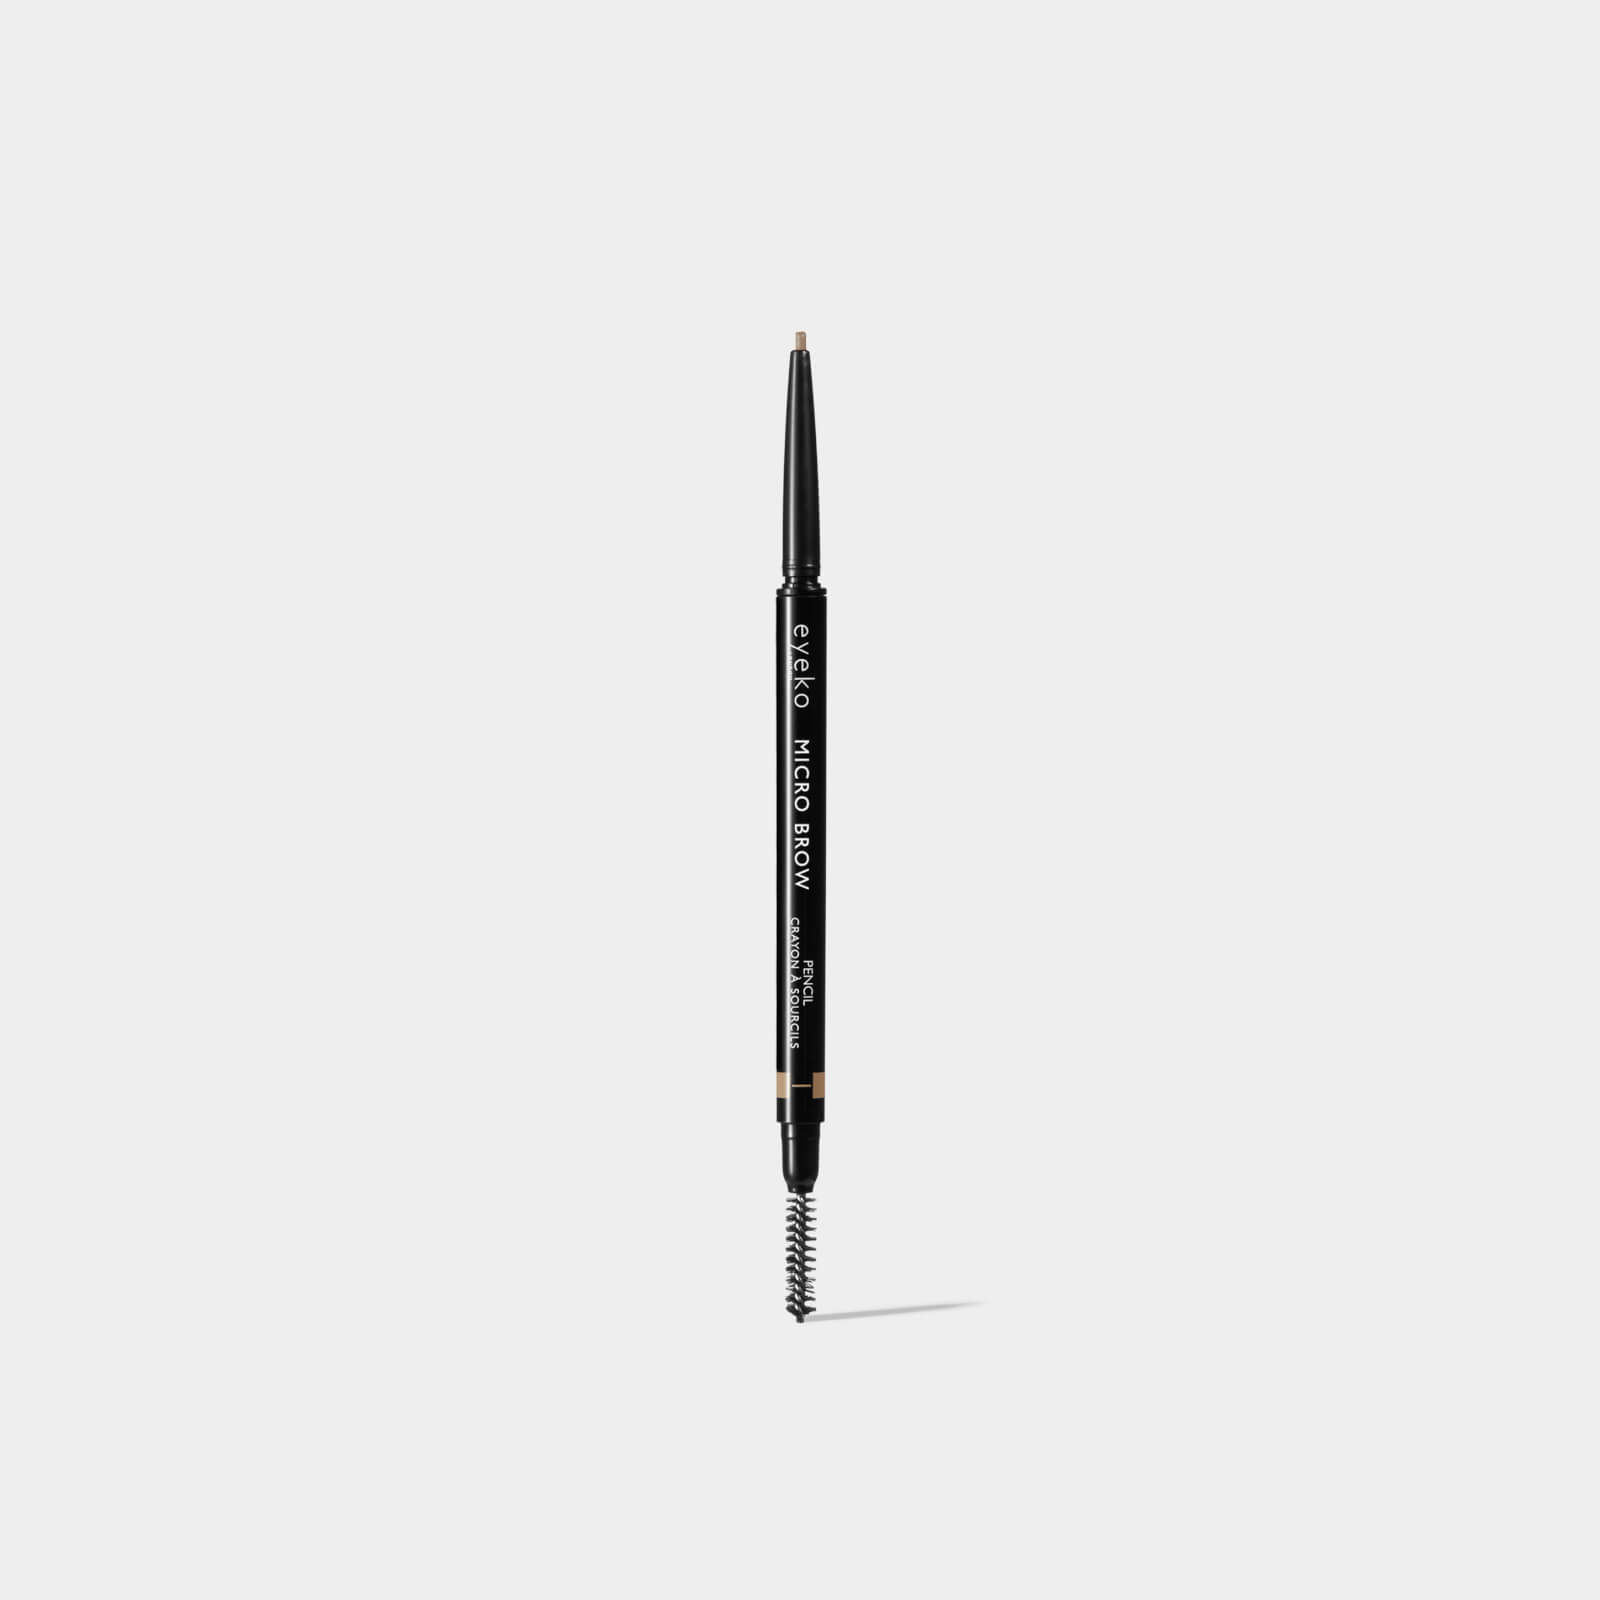 Eyeko Micro Brow Precision Pencil 2g (various Shades) - 1 In Black